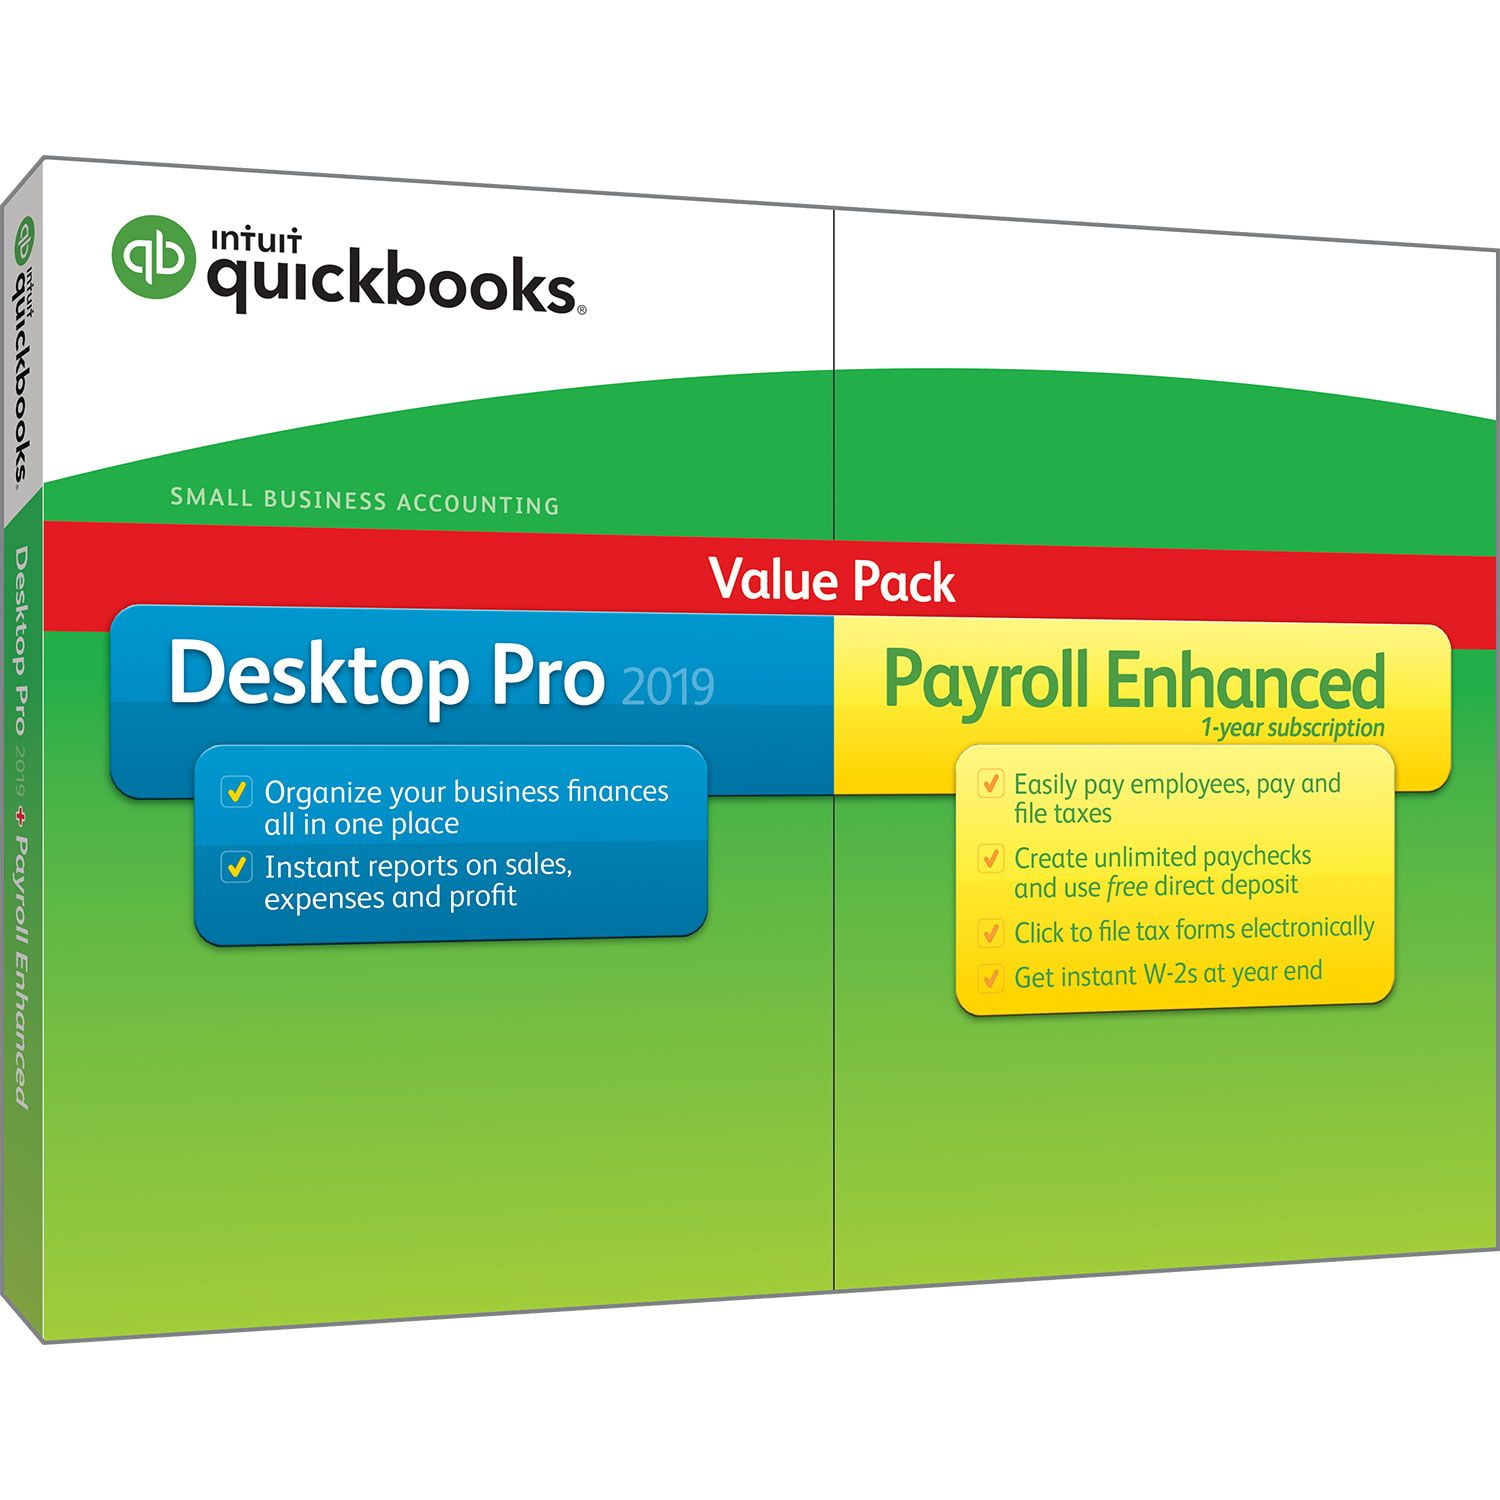 intuit quickbooks desktop pro 2020 with enhanced payroll